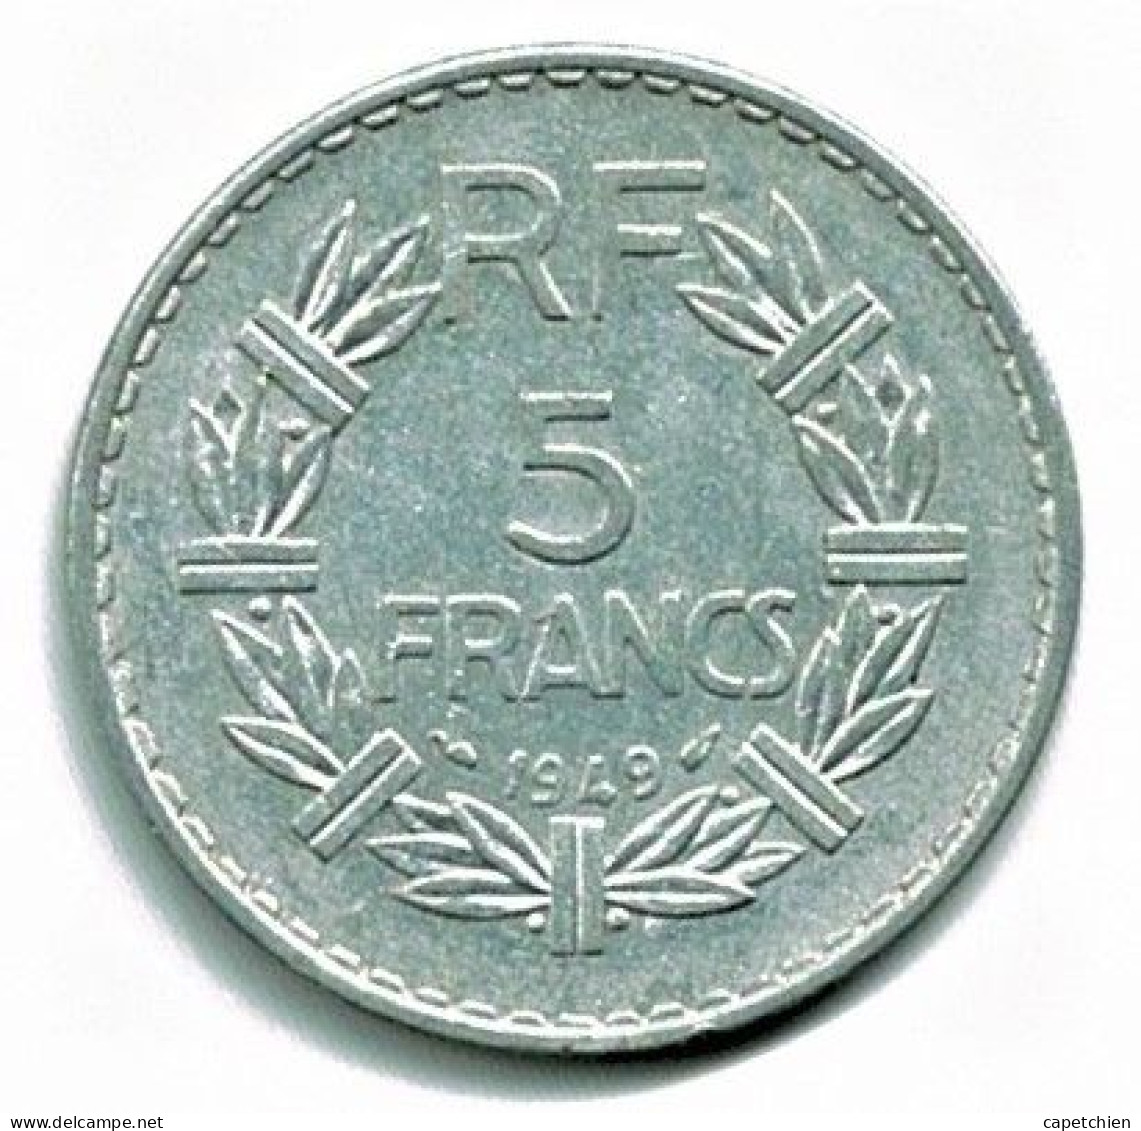 FRANCE / 5 FRANCS / LAVRILLIER / 1949 / ETAT TTB + / ALU - 5 Francs